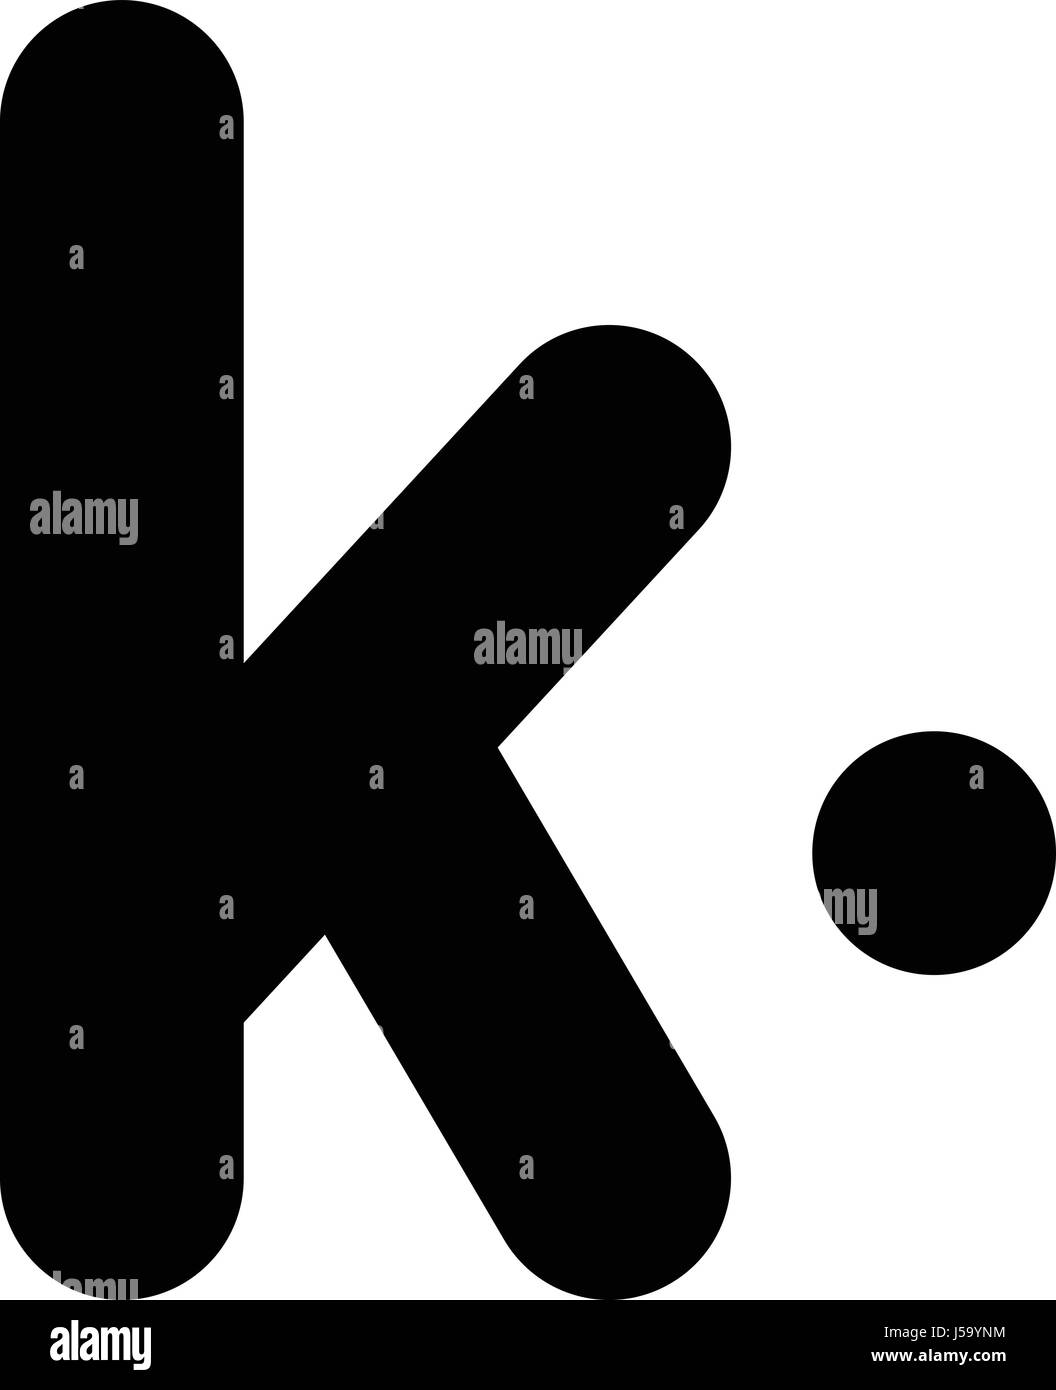 Kik Black and White Stock Photos & Images - Alamy